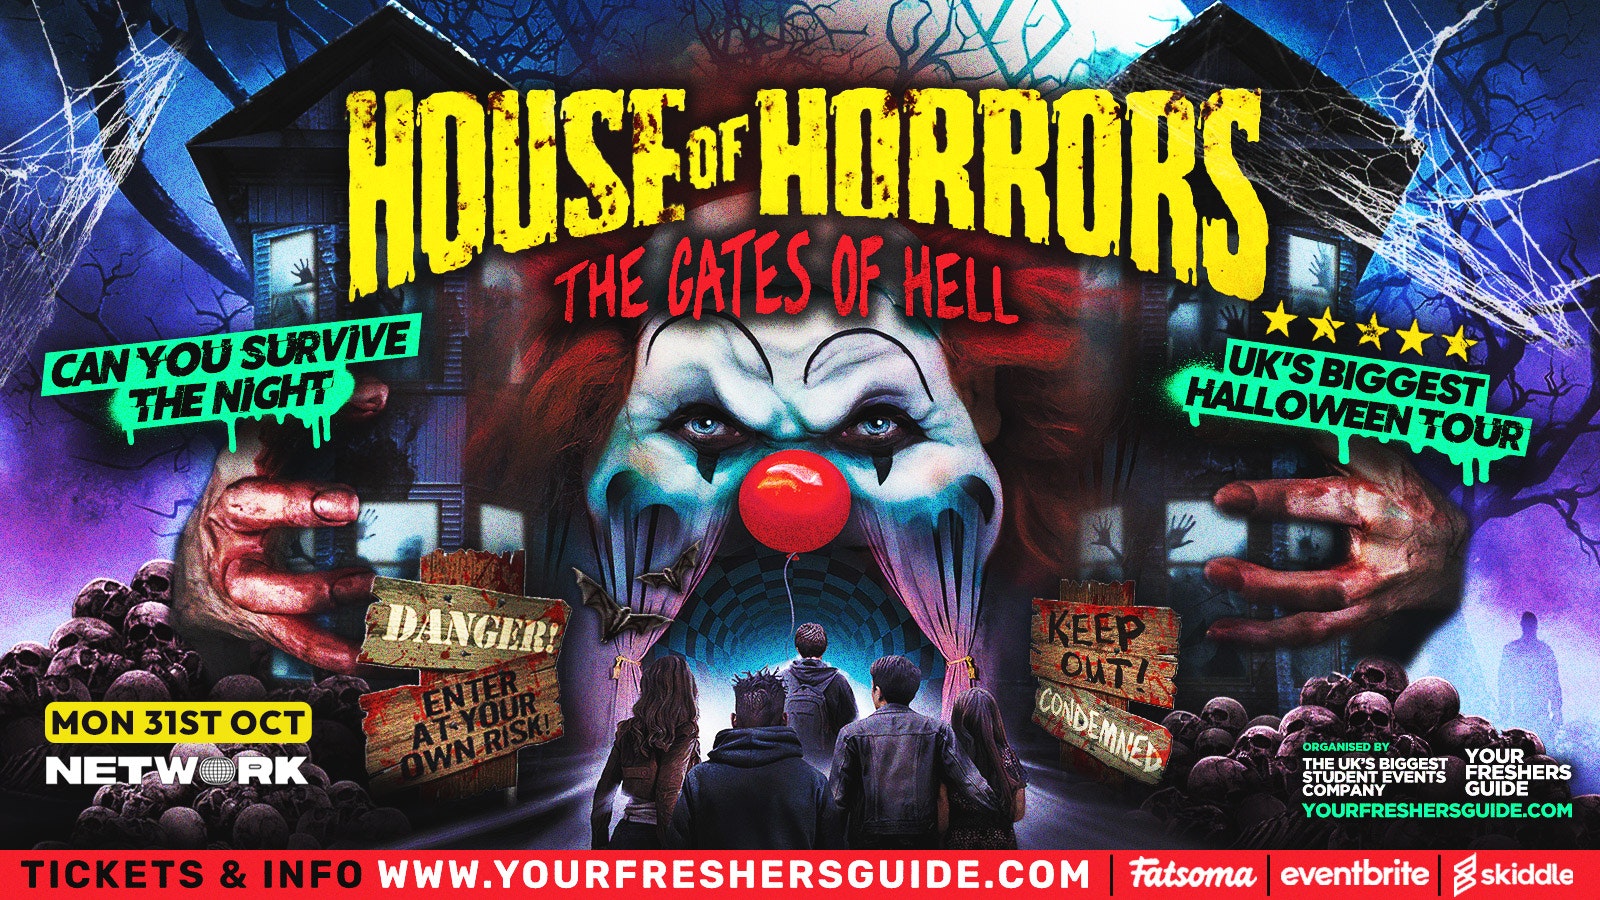 House of Horrors @ Network | Sheffield Halloween 2022